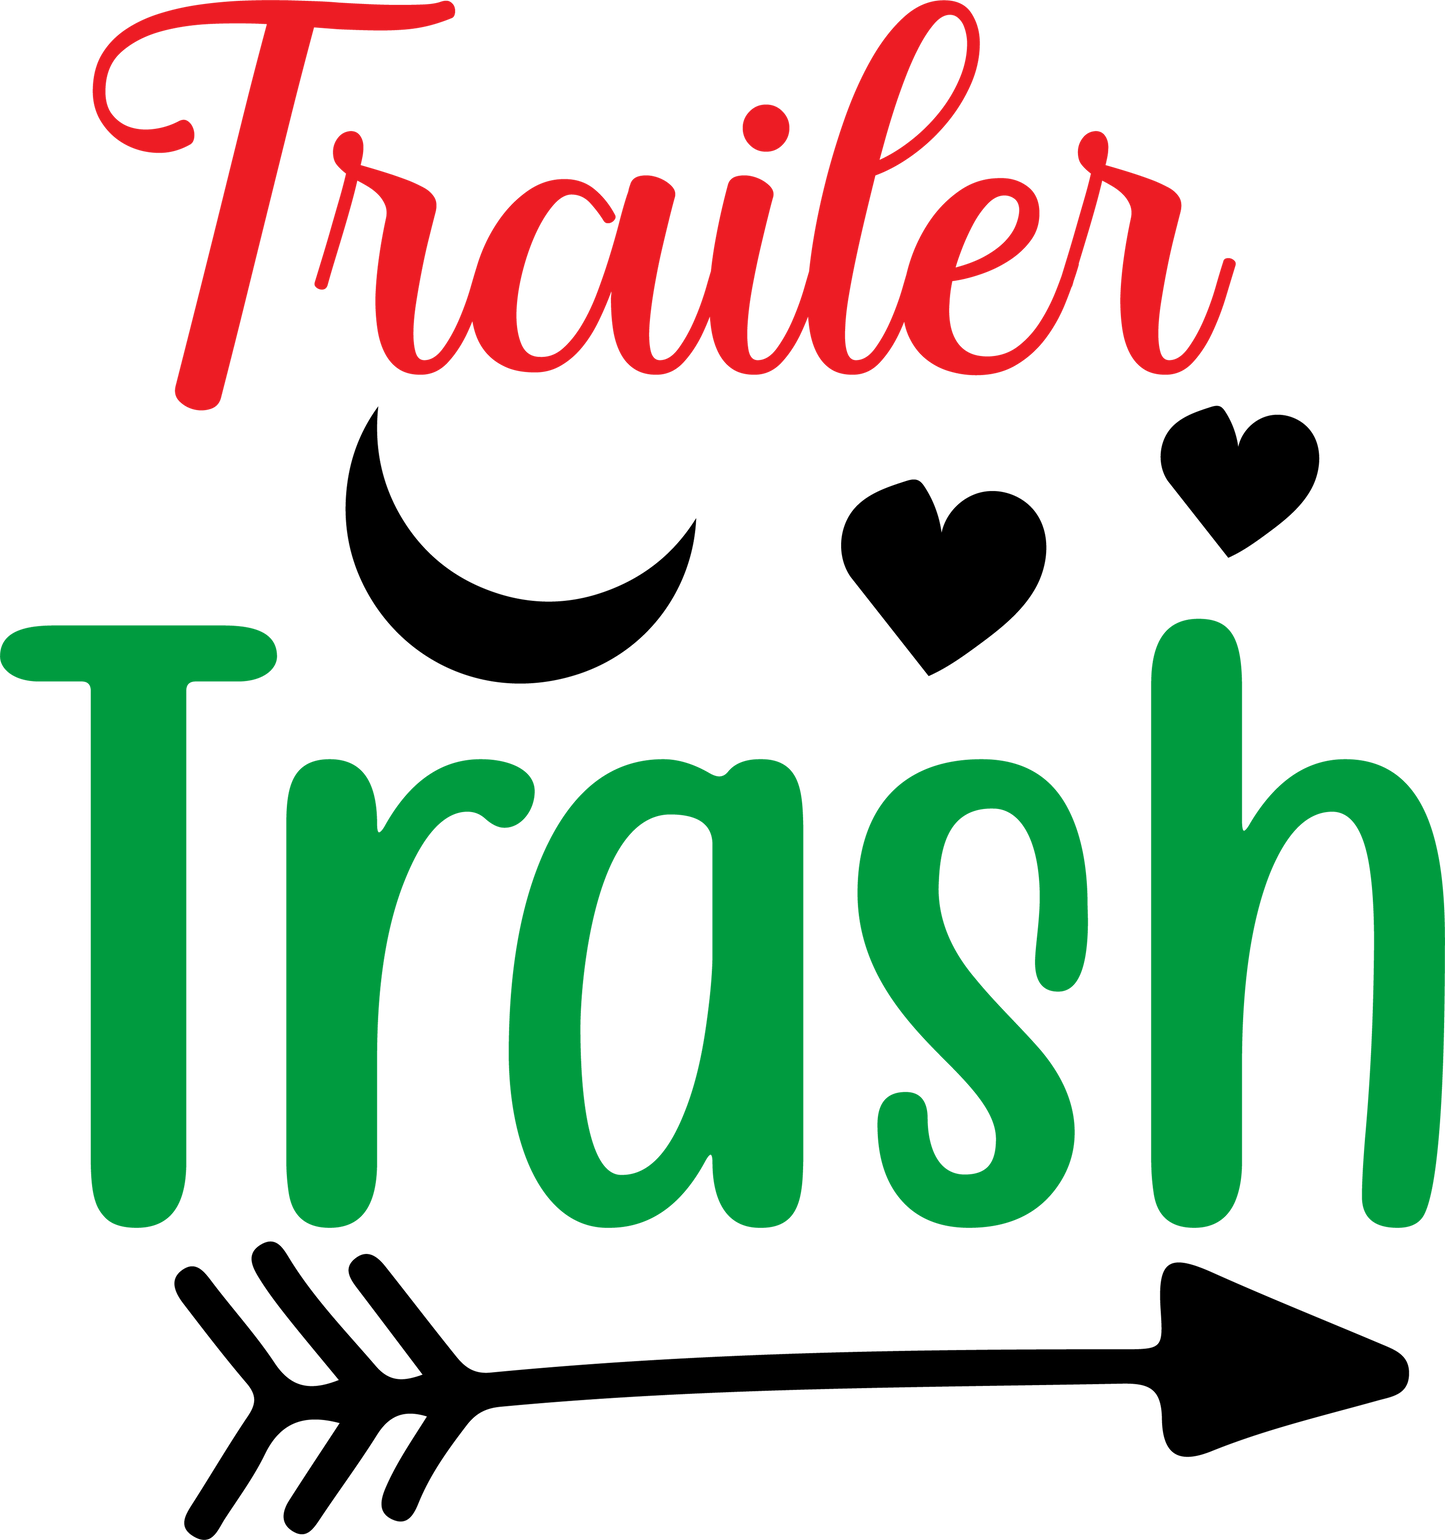 Trailer Trash - 1020 Ready to Press DTF Transfer